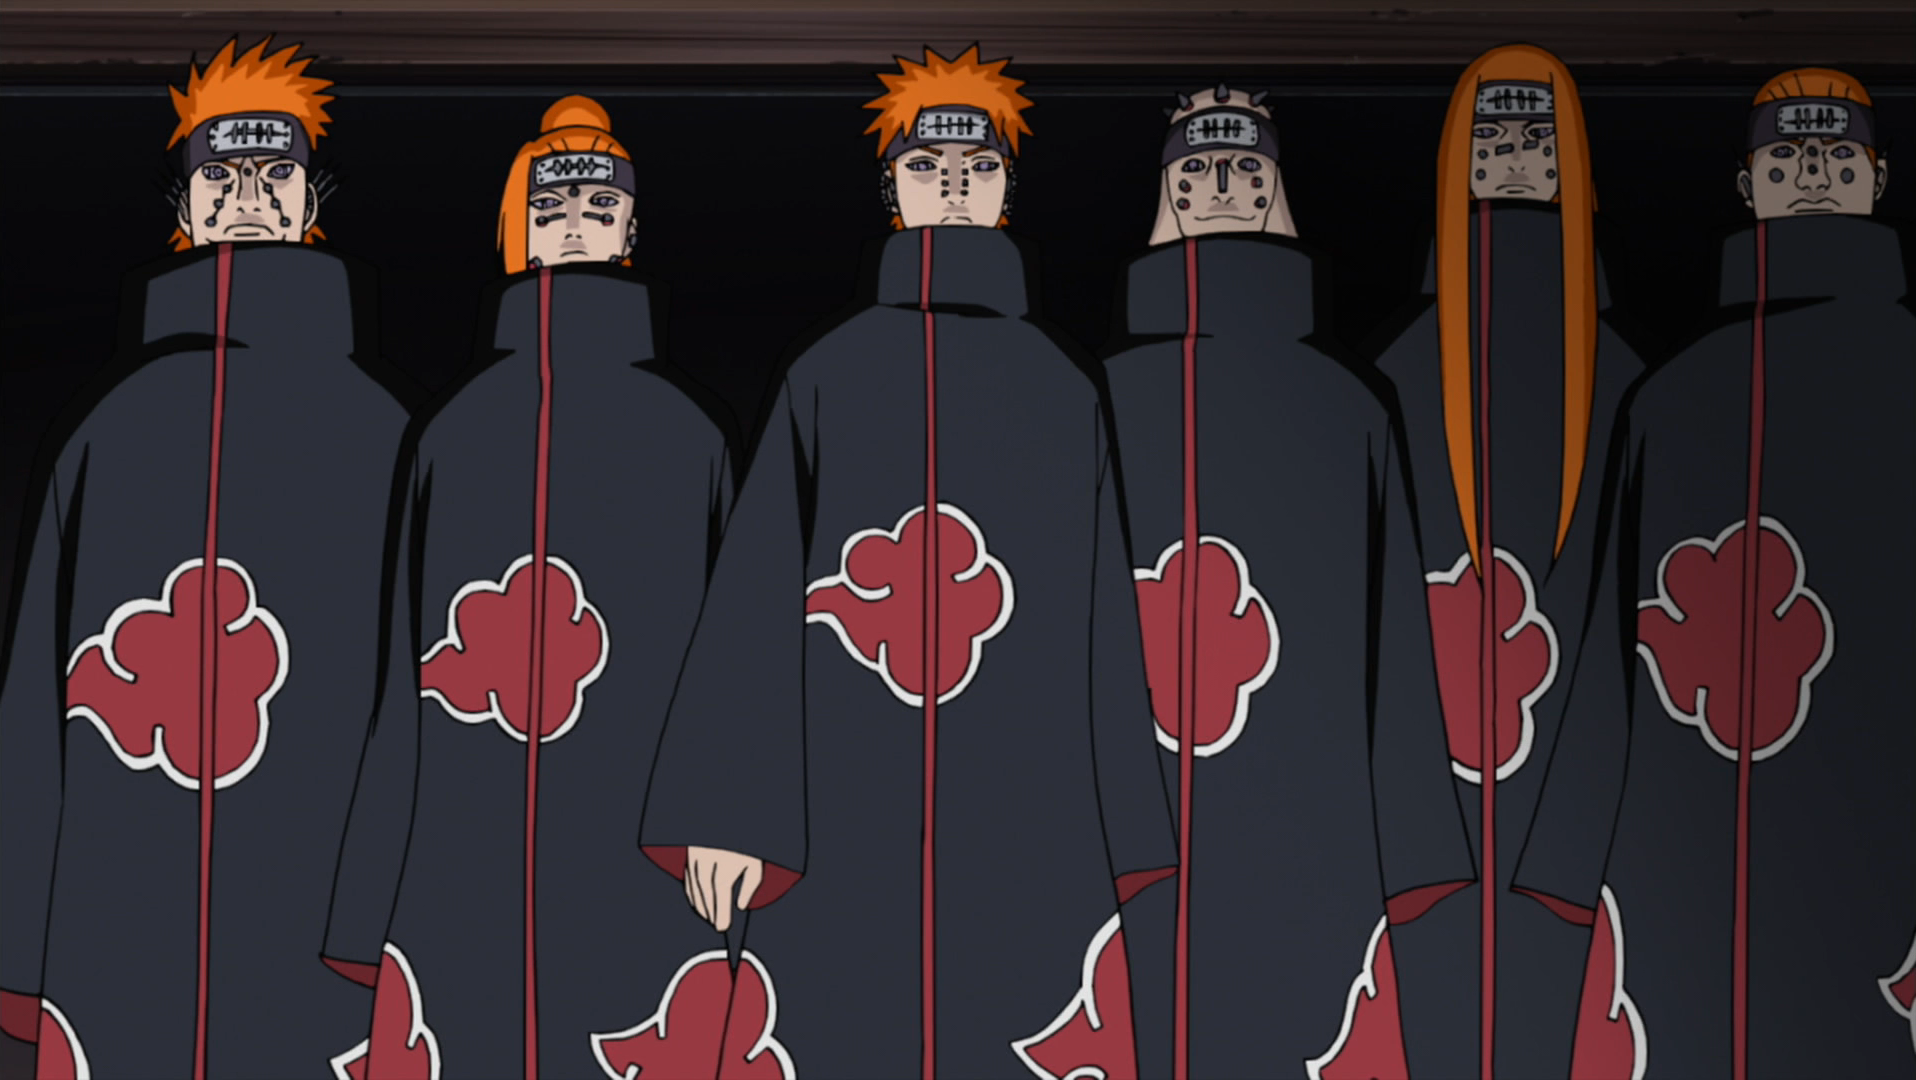 Six Paths Of Pain Narutopedia Fandom Powered By Wikia